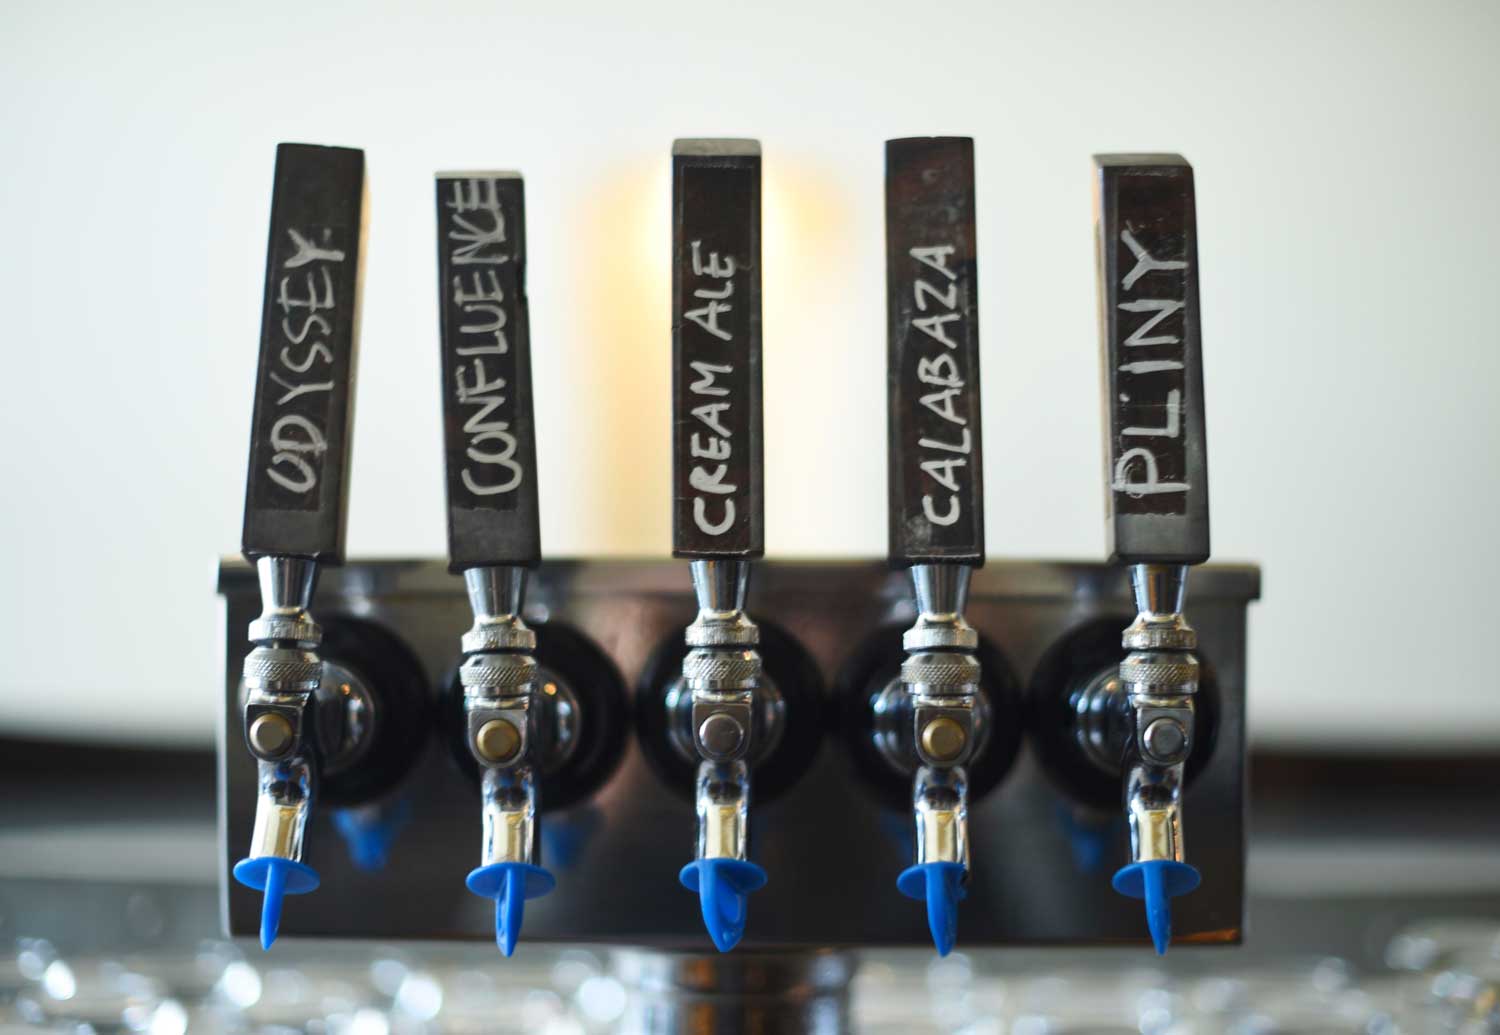 Bar Crudo's high quality beer selection compliments its fresh seafood menu.